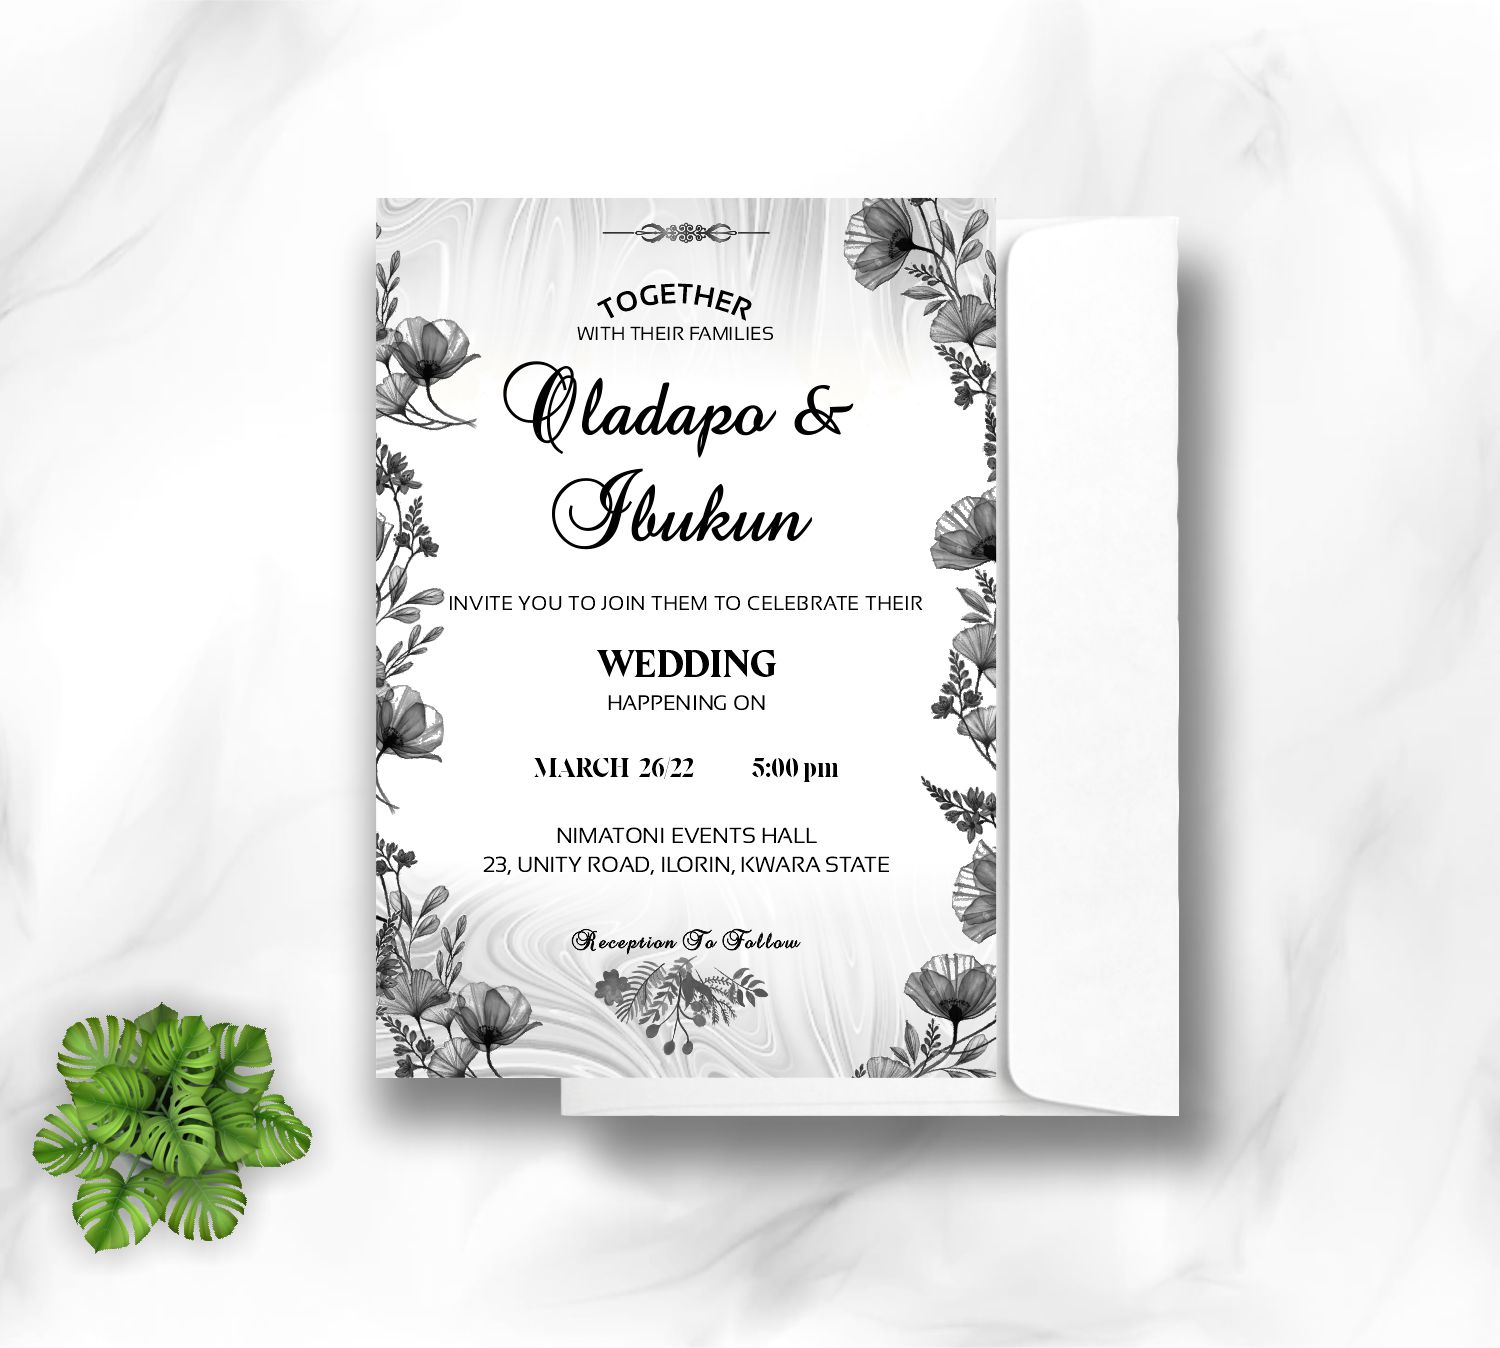 get nigerian white wedding invitation card design and printing